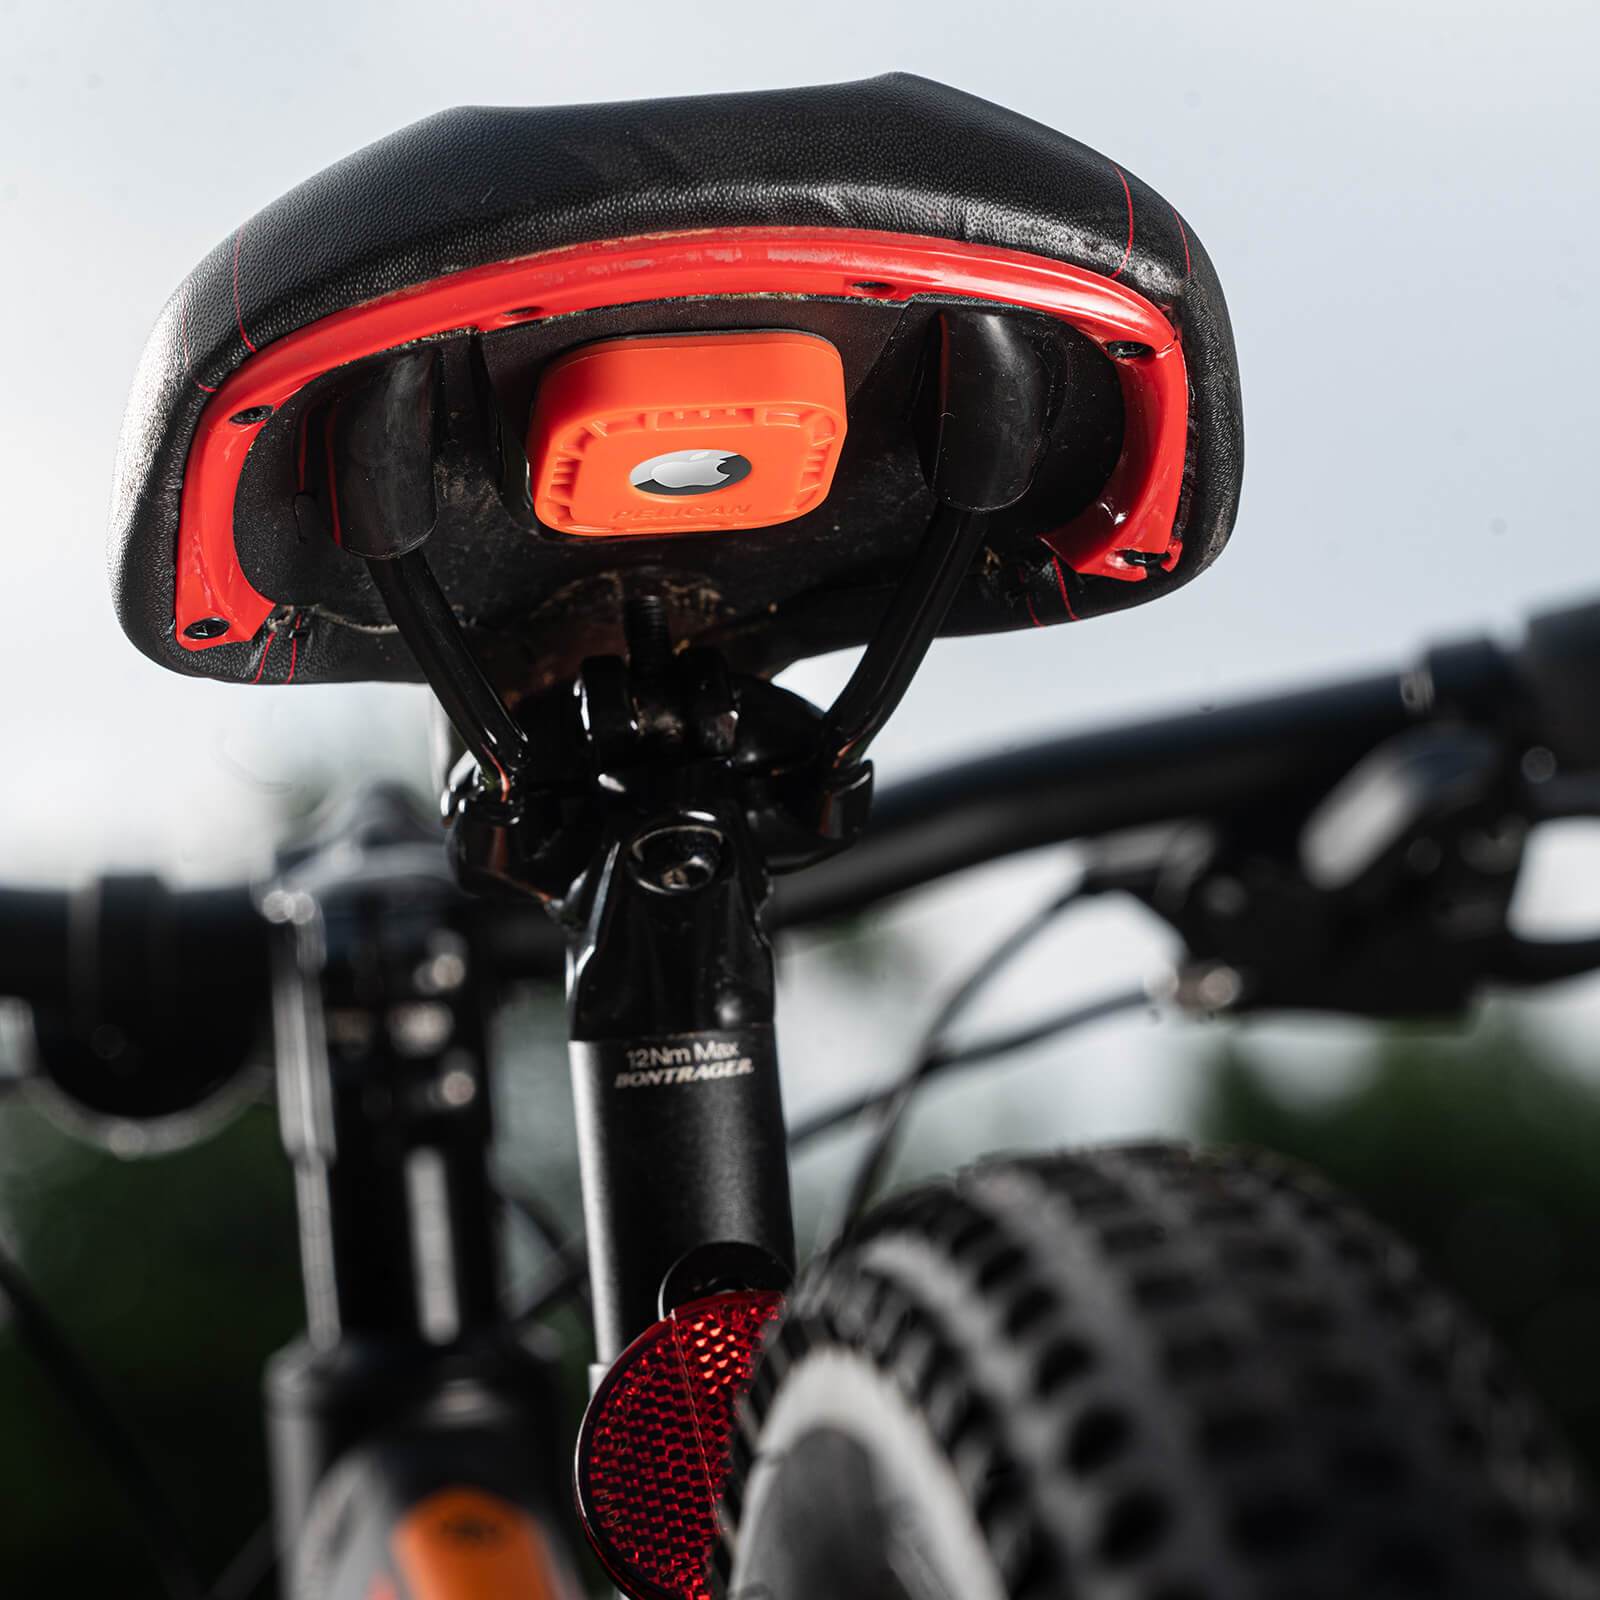 Sticker mount attached to bike. color::Orange